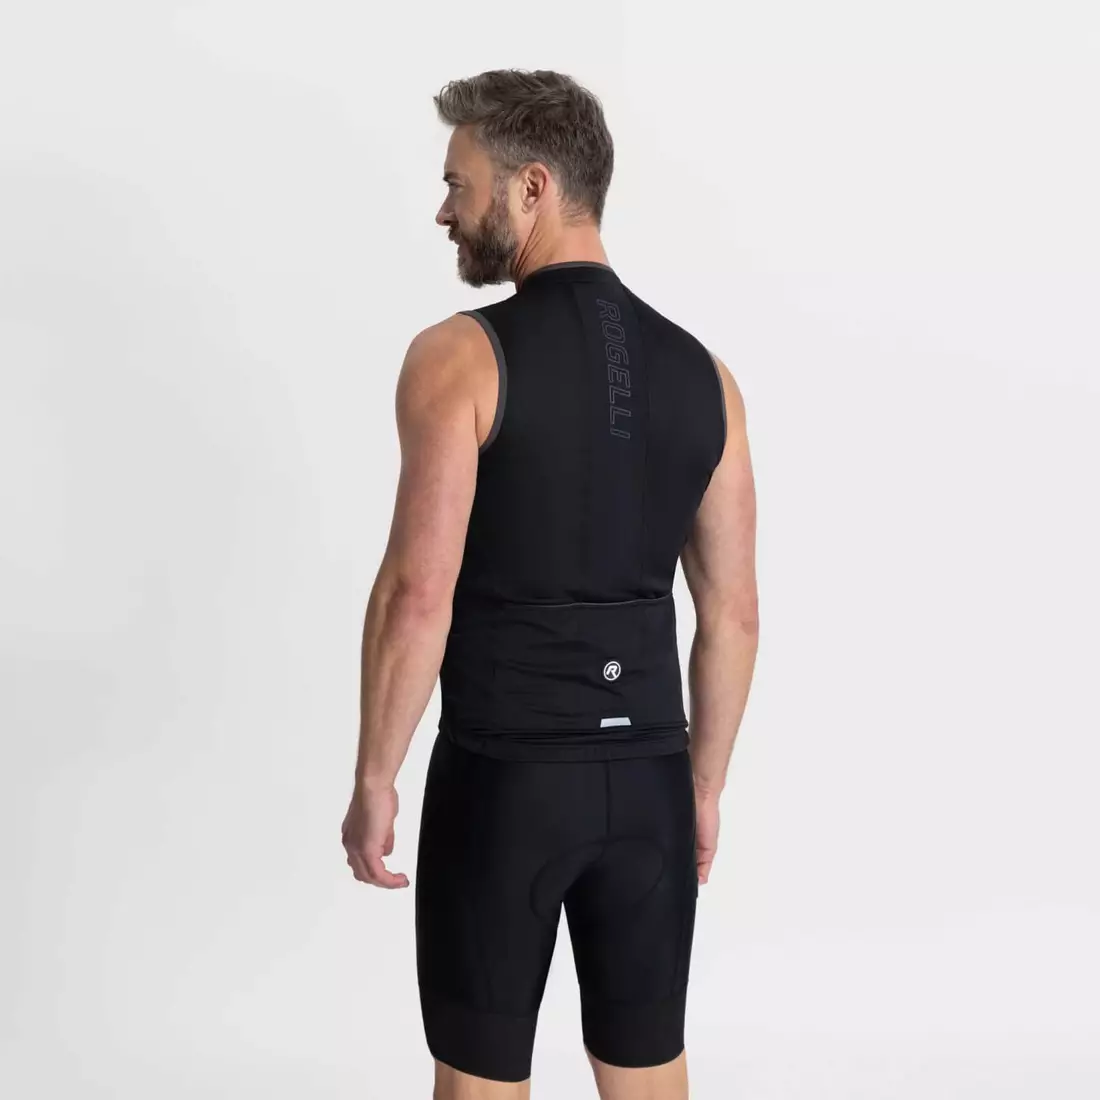 Rogelli ESSENTIAL men's cycling vest, black